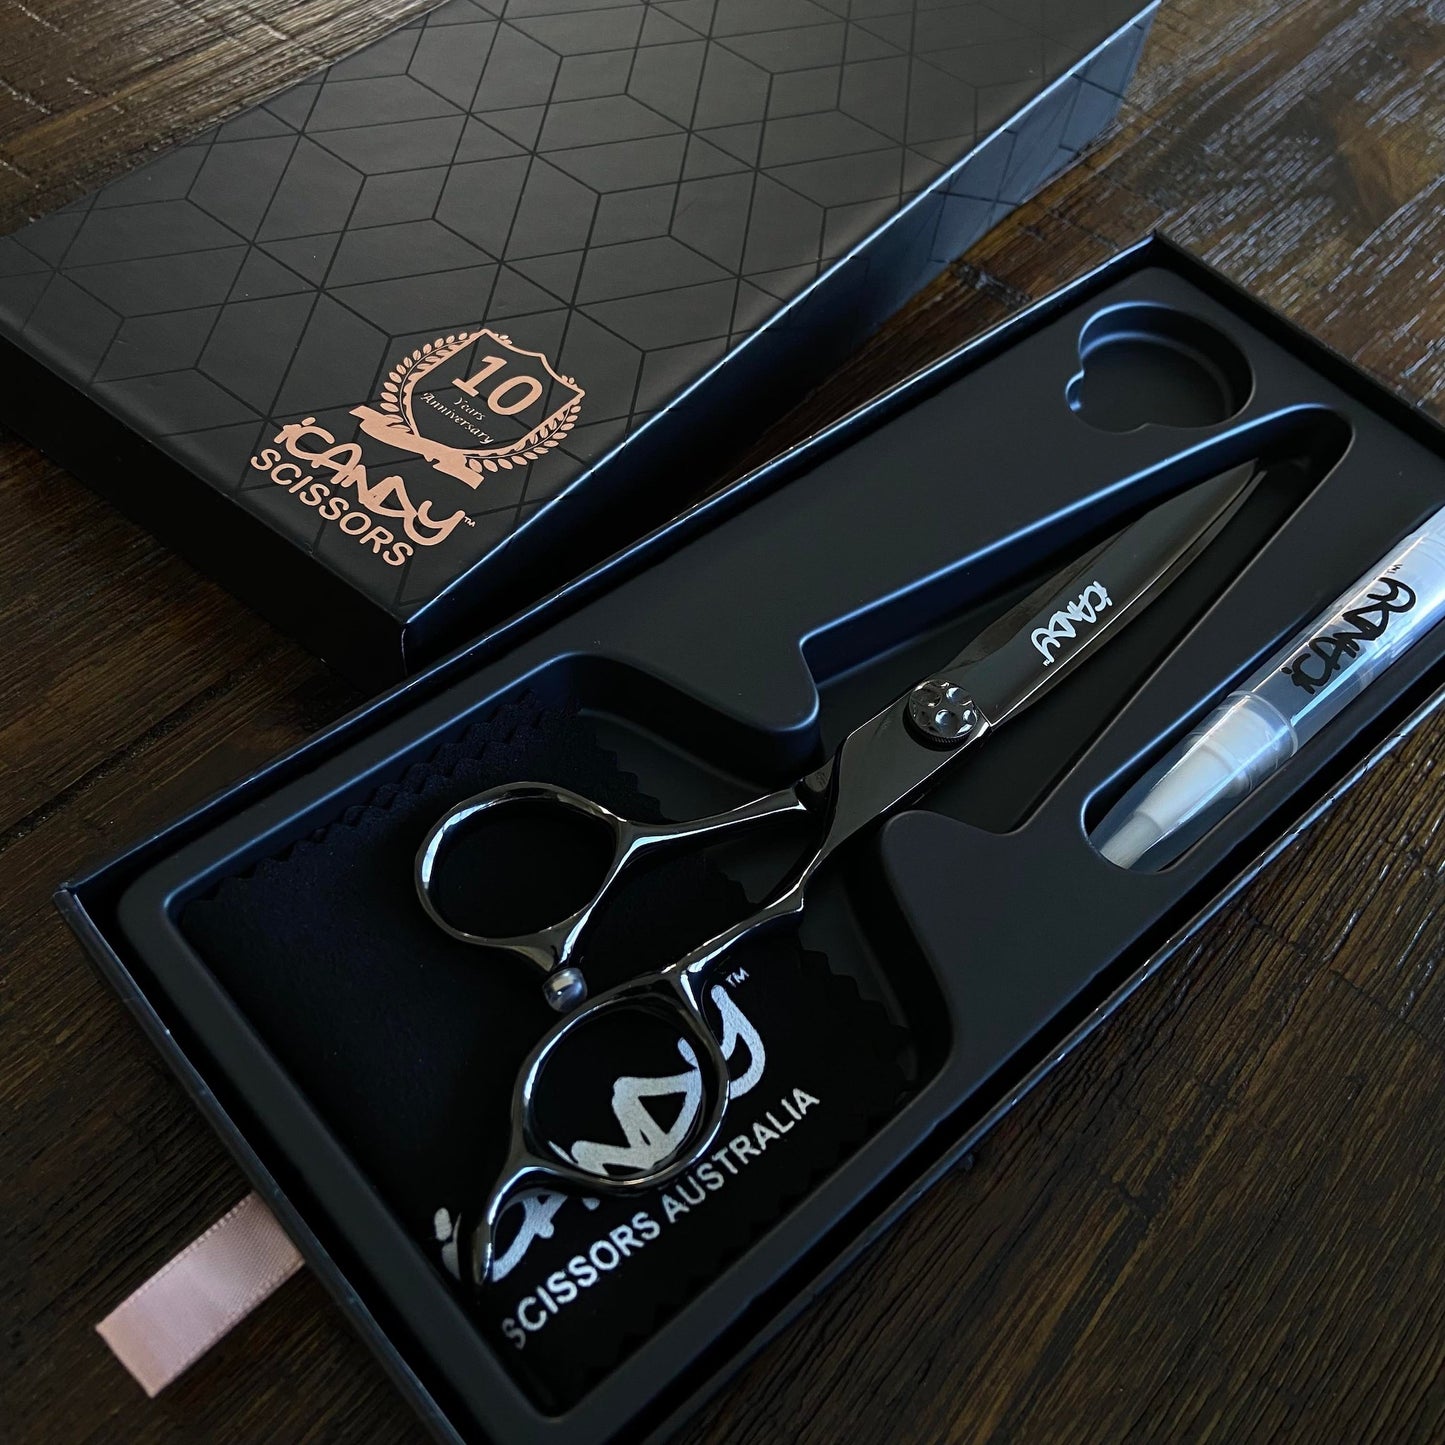 iCandy Sword Midnight Black VG10 6.6" 10 Years Anniversary Edition Scissors Open Box